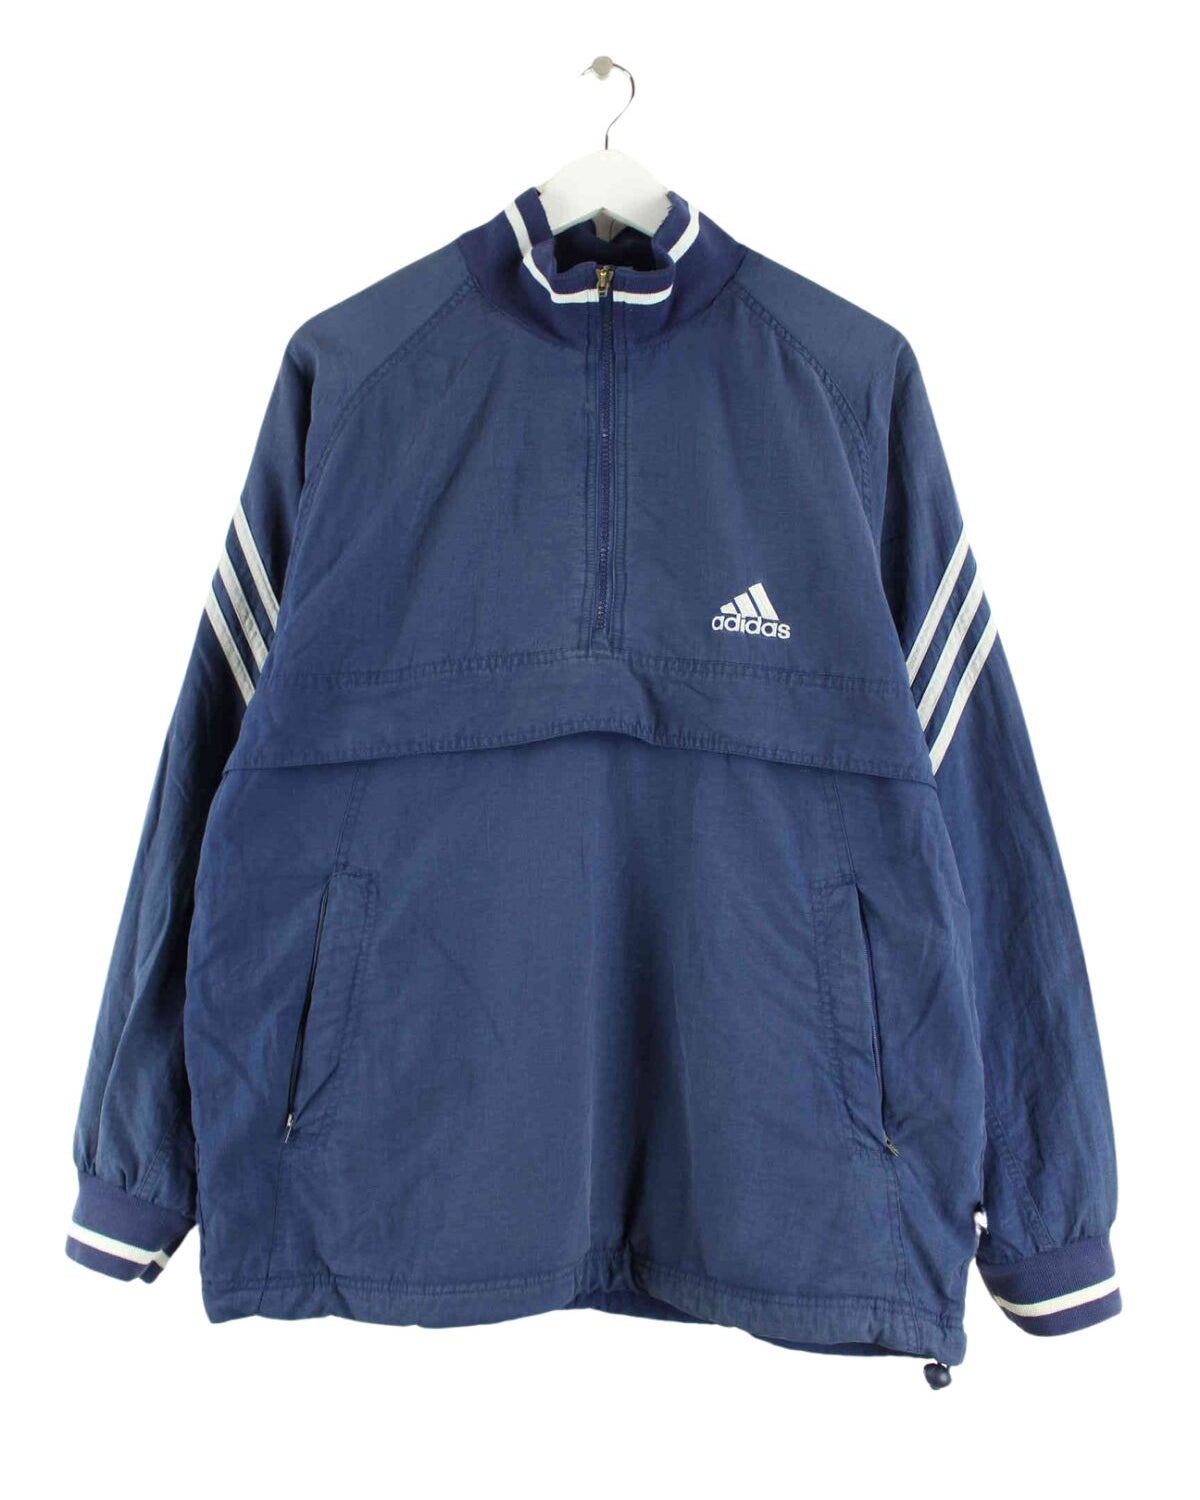 Adidas 90s Vintage 3-Stripes Jacke Blau M (front image)